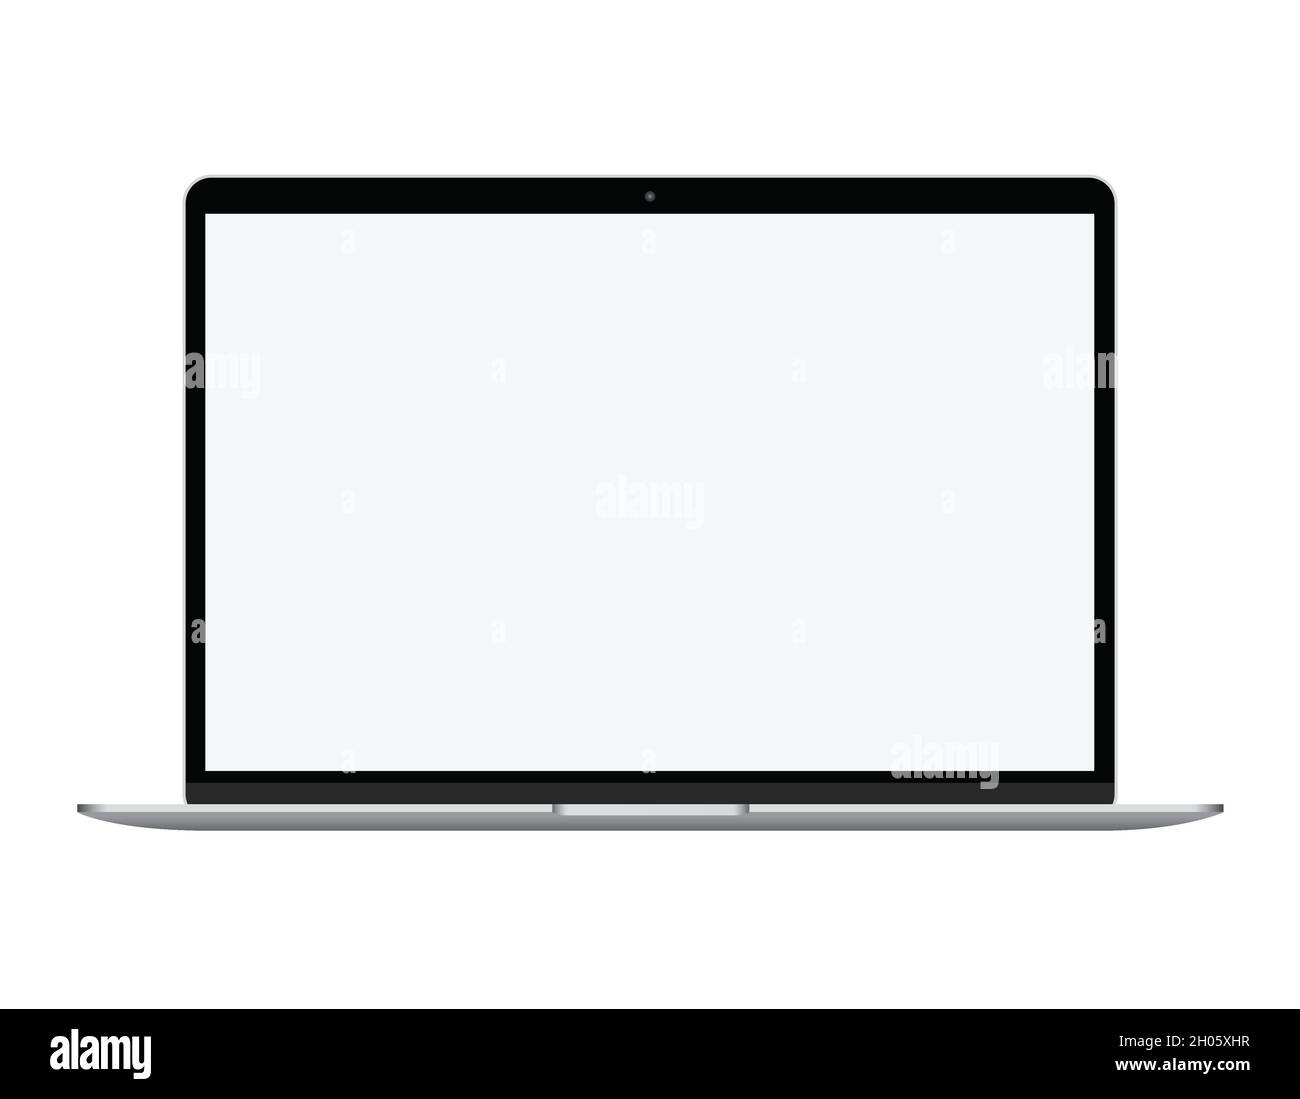 Modern new model macbook air silver notebook, flat design laptop vector stock illustration Stock Vector